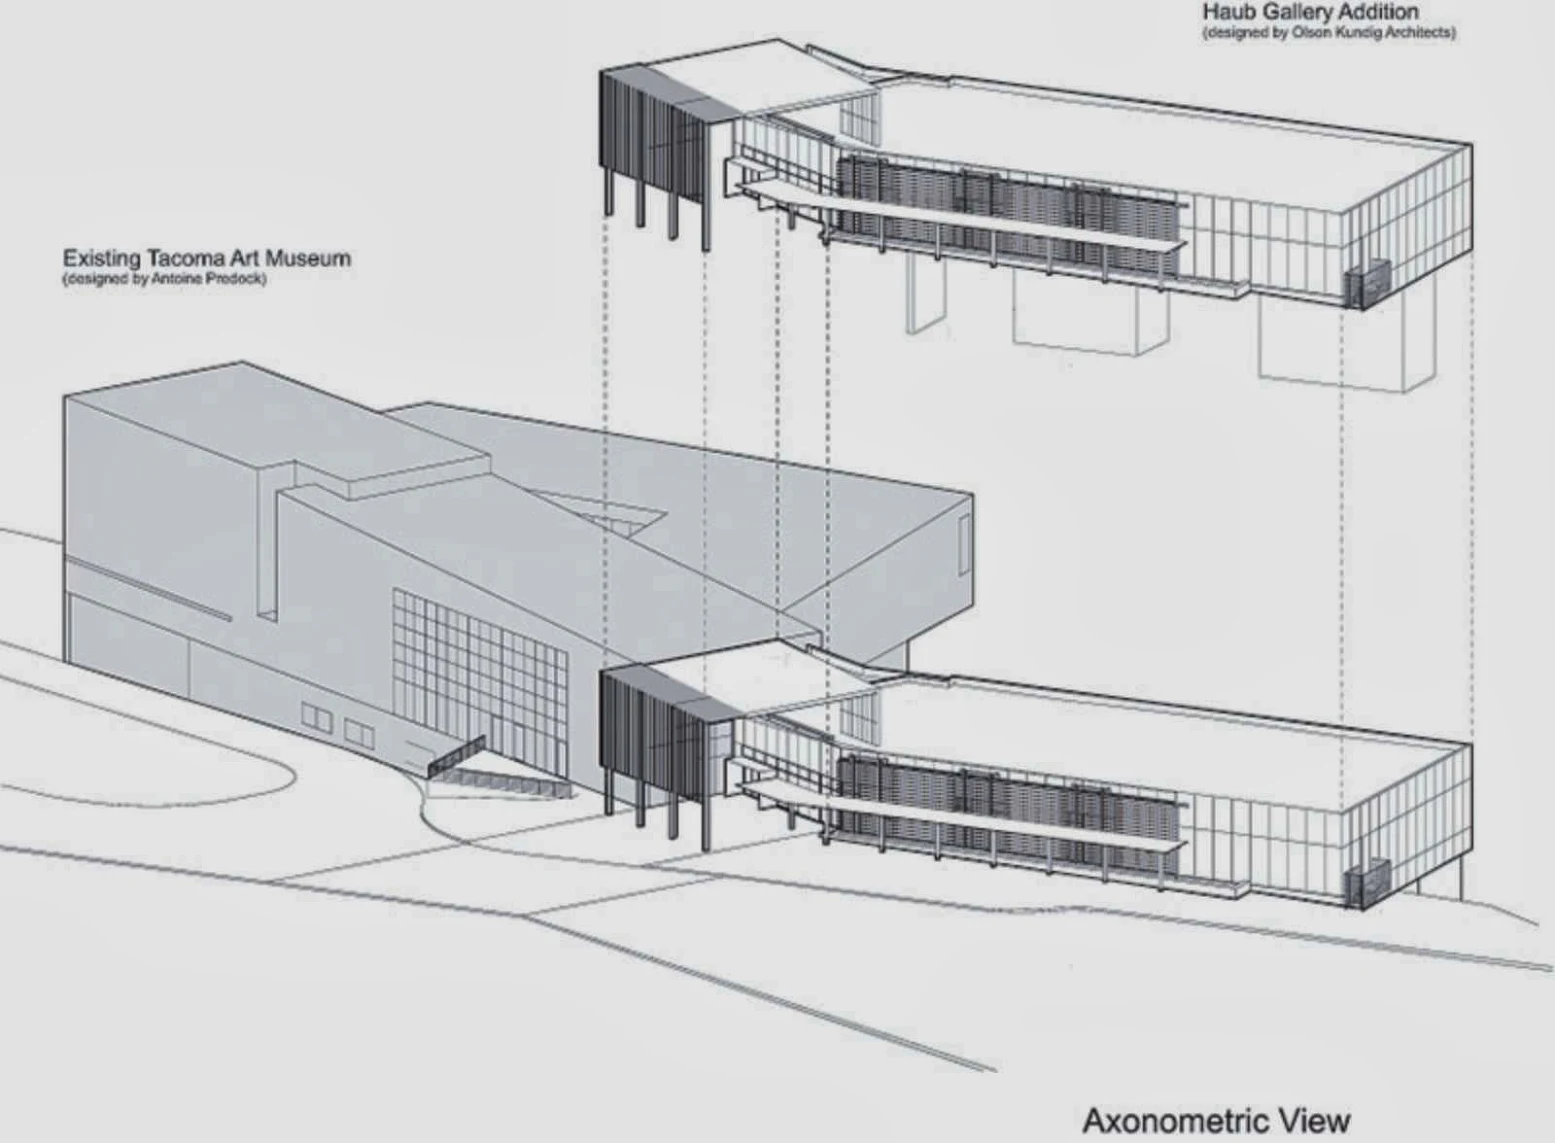 New Haub Wing by Olson Kundig Architects